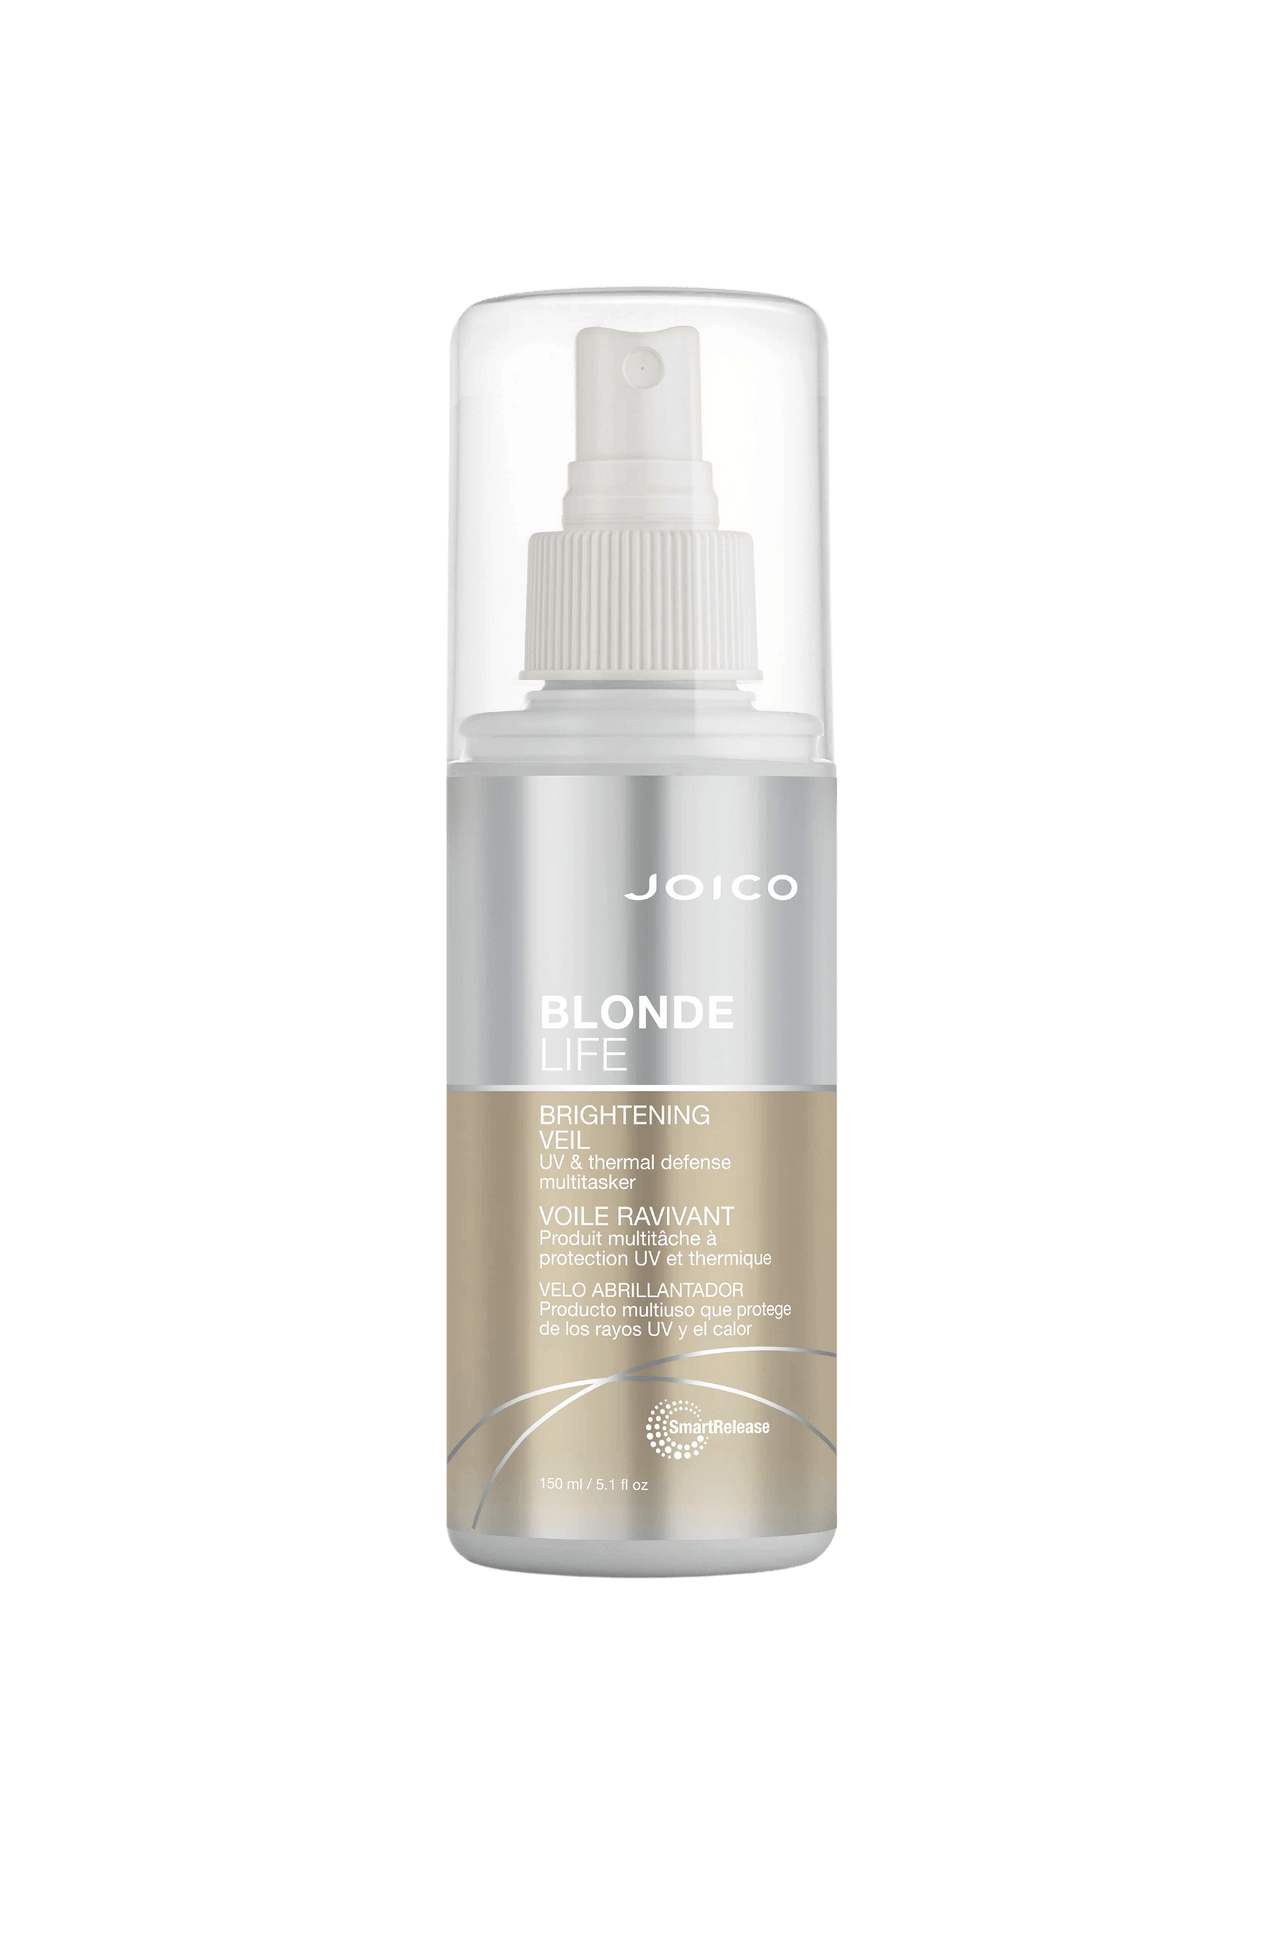 Joico Blonde Life Brightening Veil 150mL Spray